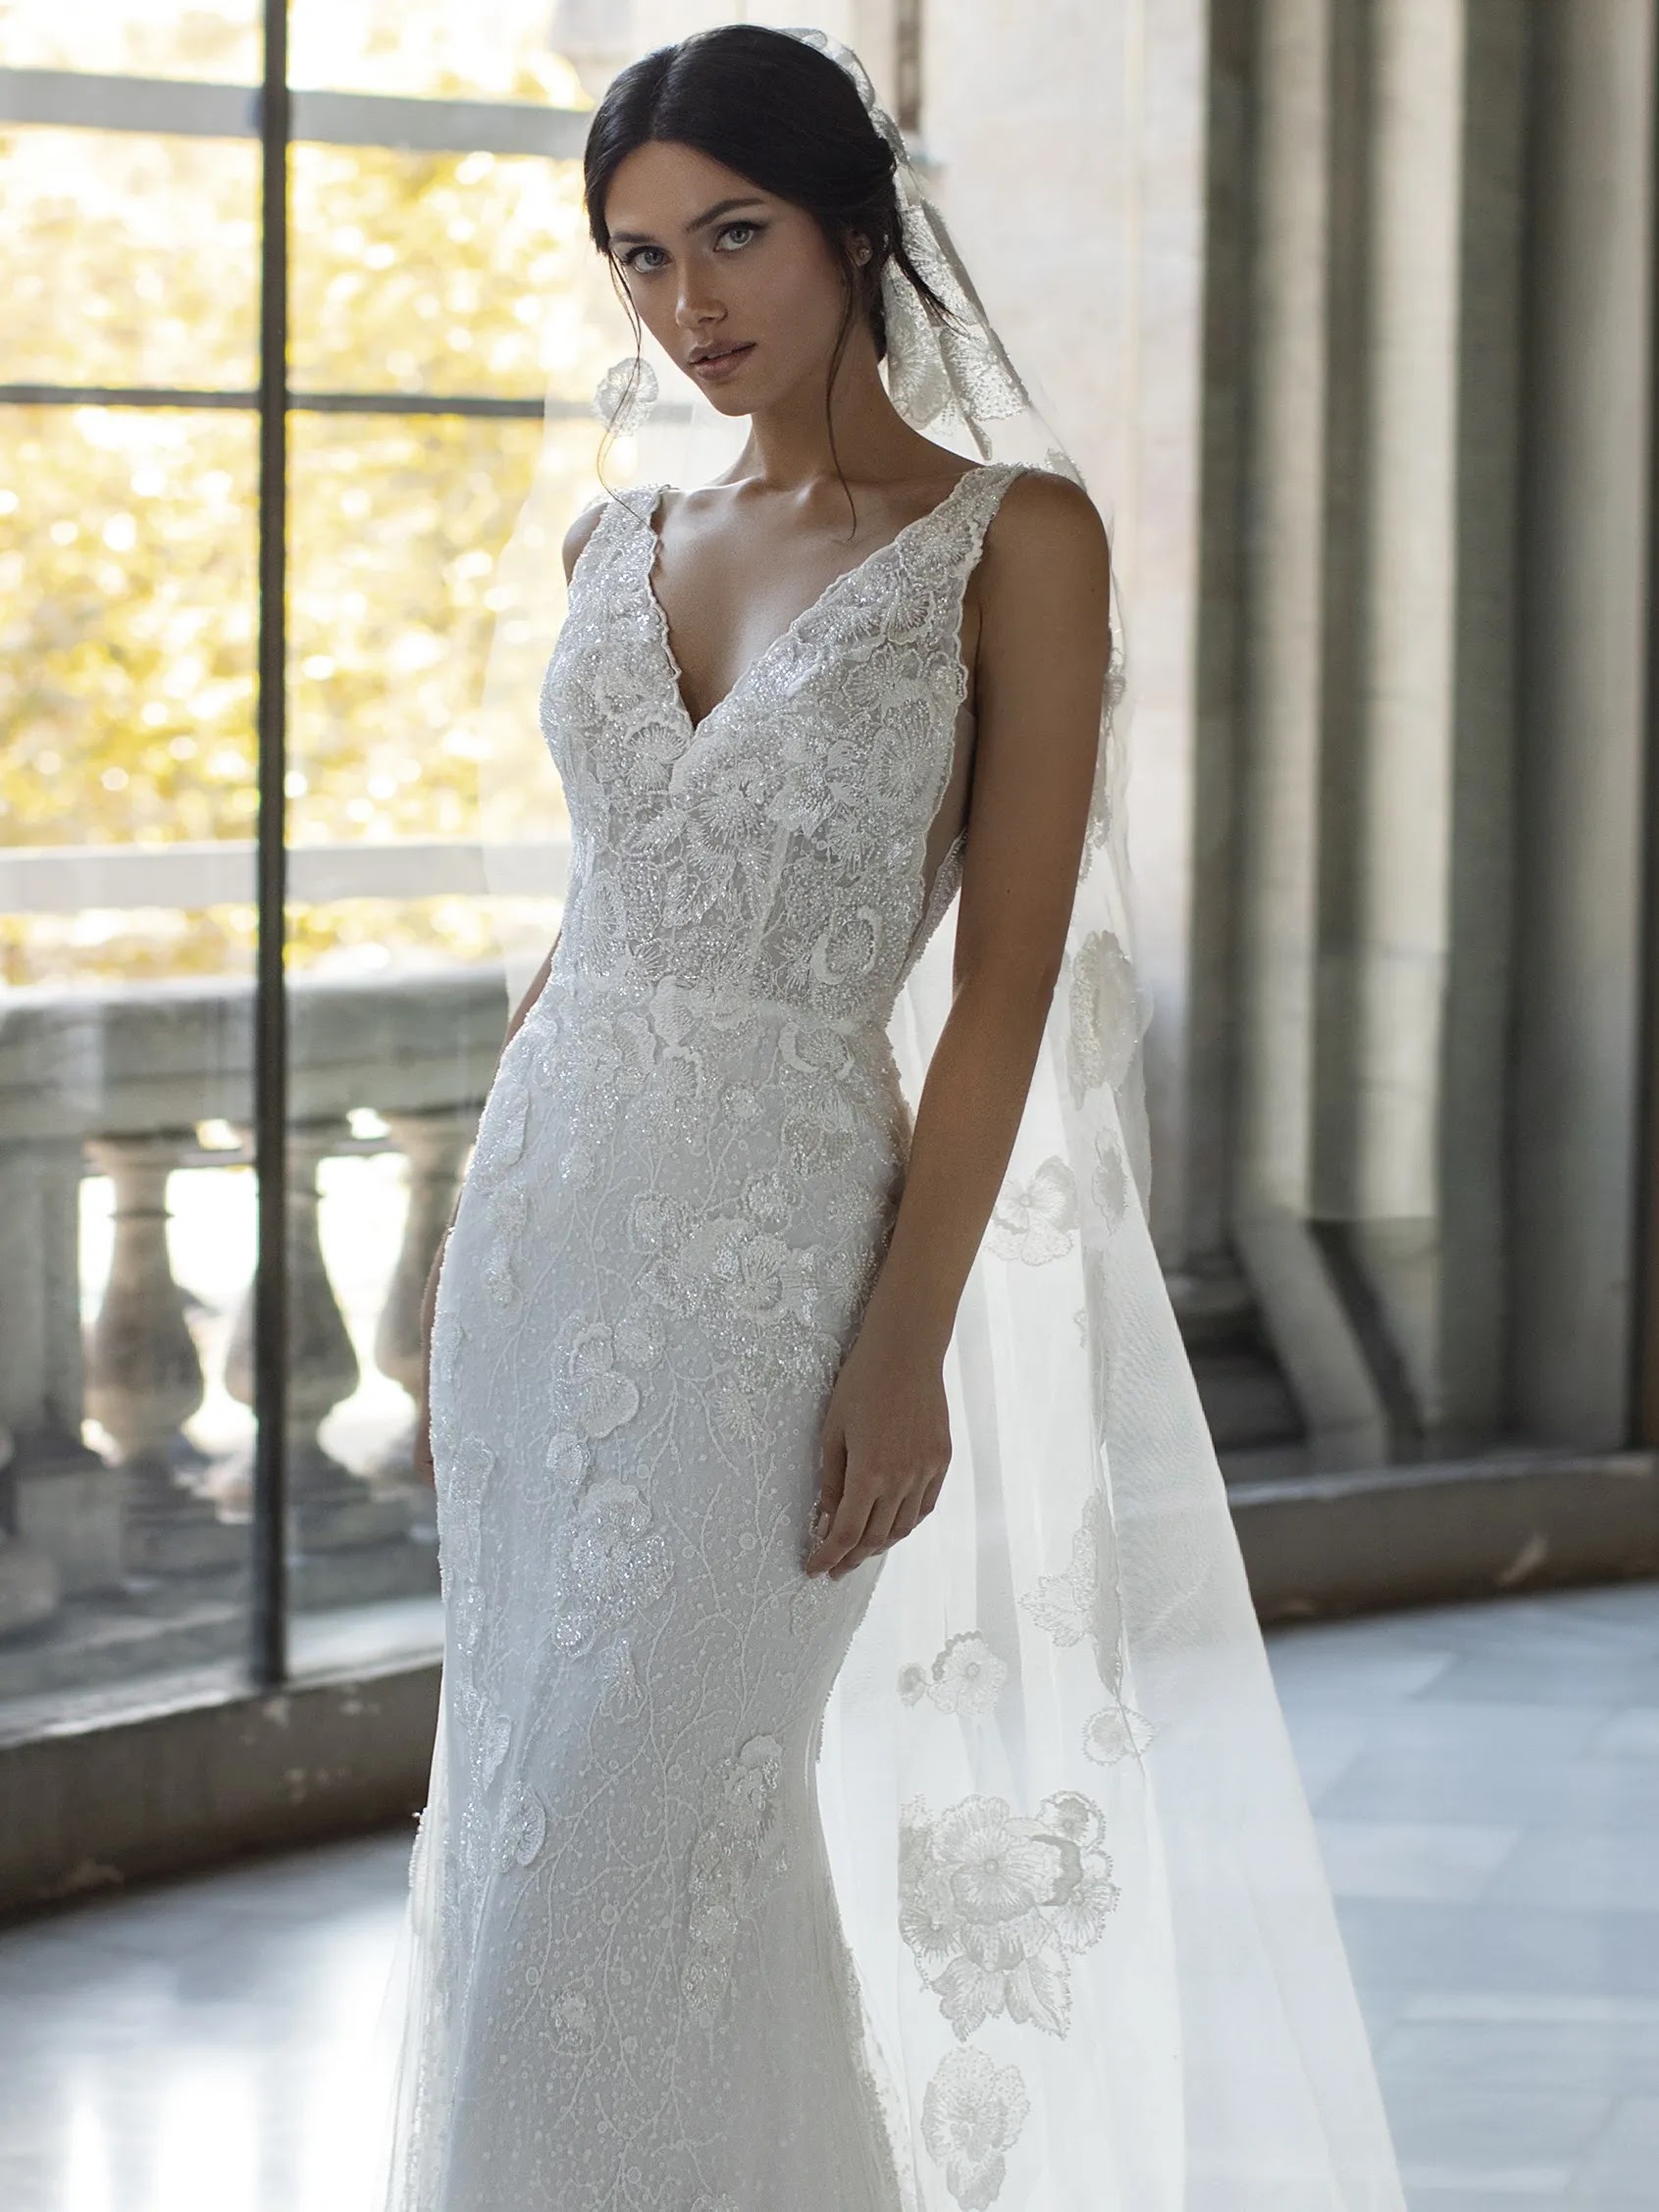 How To Choose A Bridal Veil from Pronovias